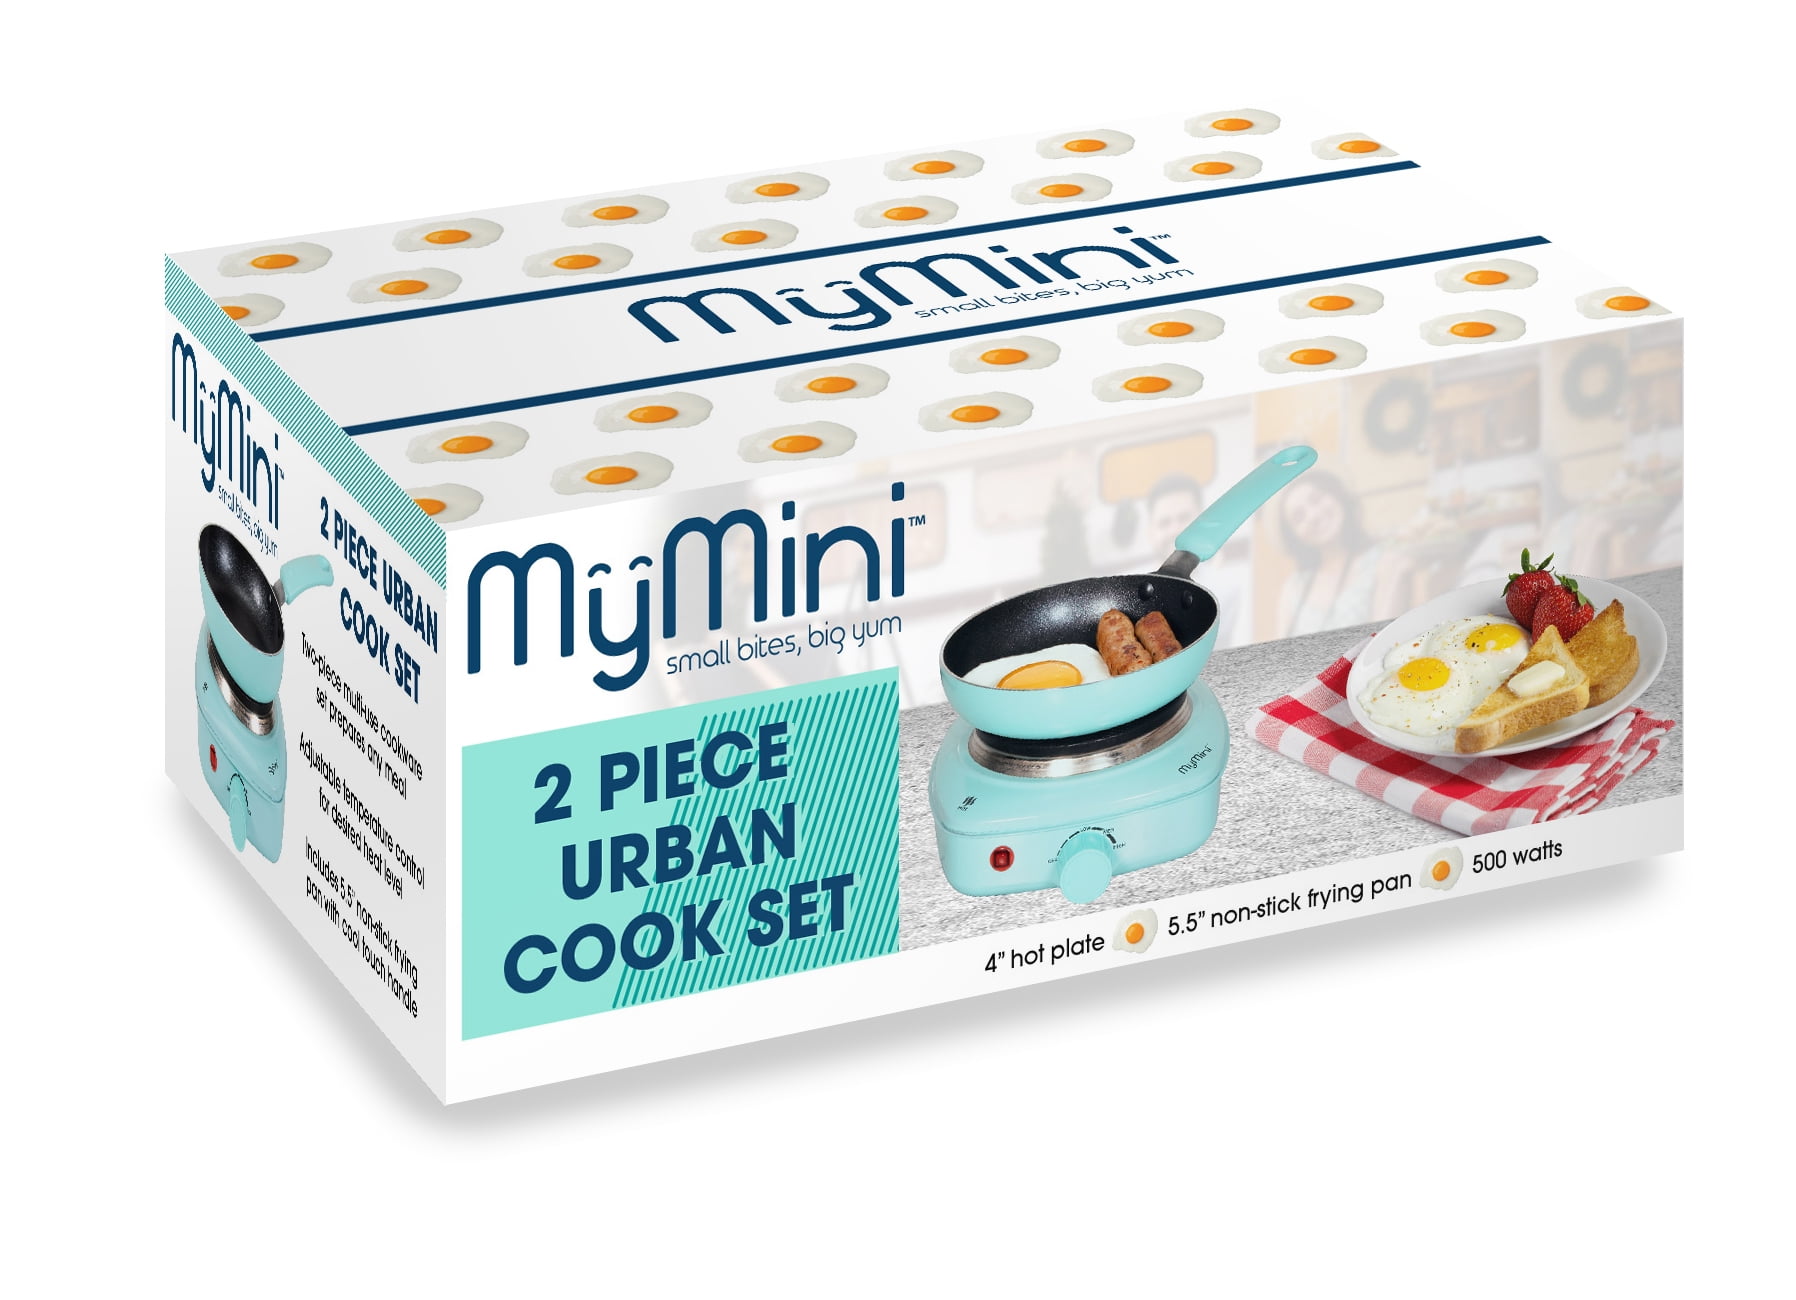 MyMini Kitchen Appliances for $8+